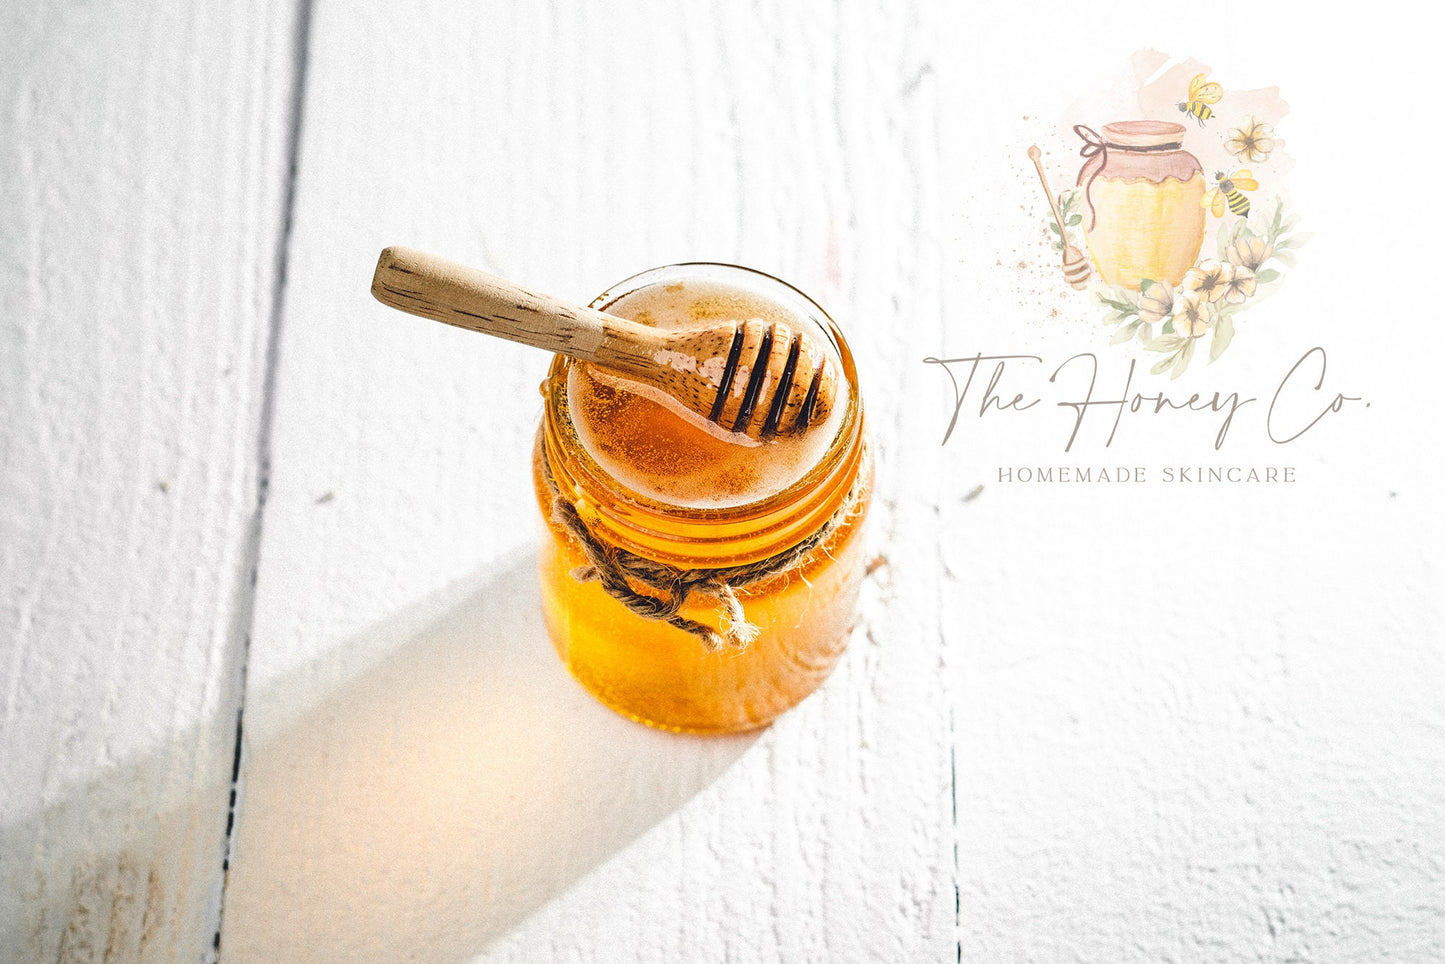 The Honey Co | Premade Logo Design | Bumble Bee, Honeybee, Skincare, Farmhouse